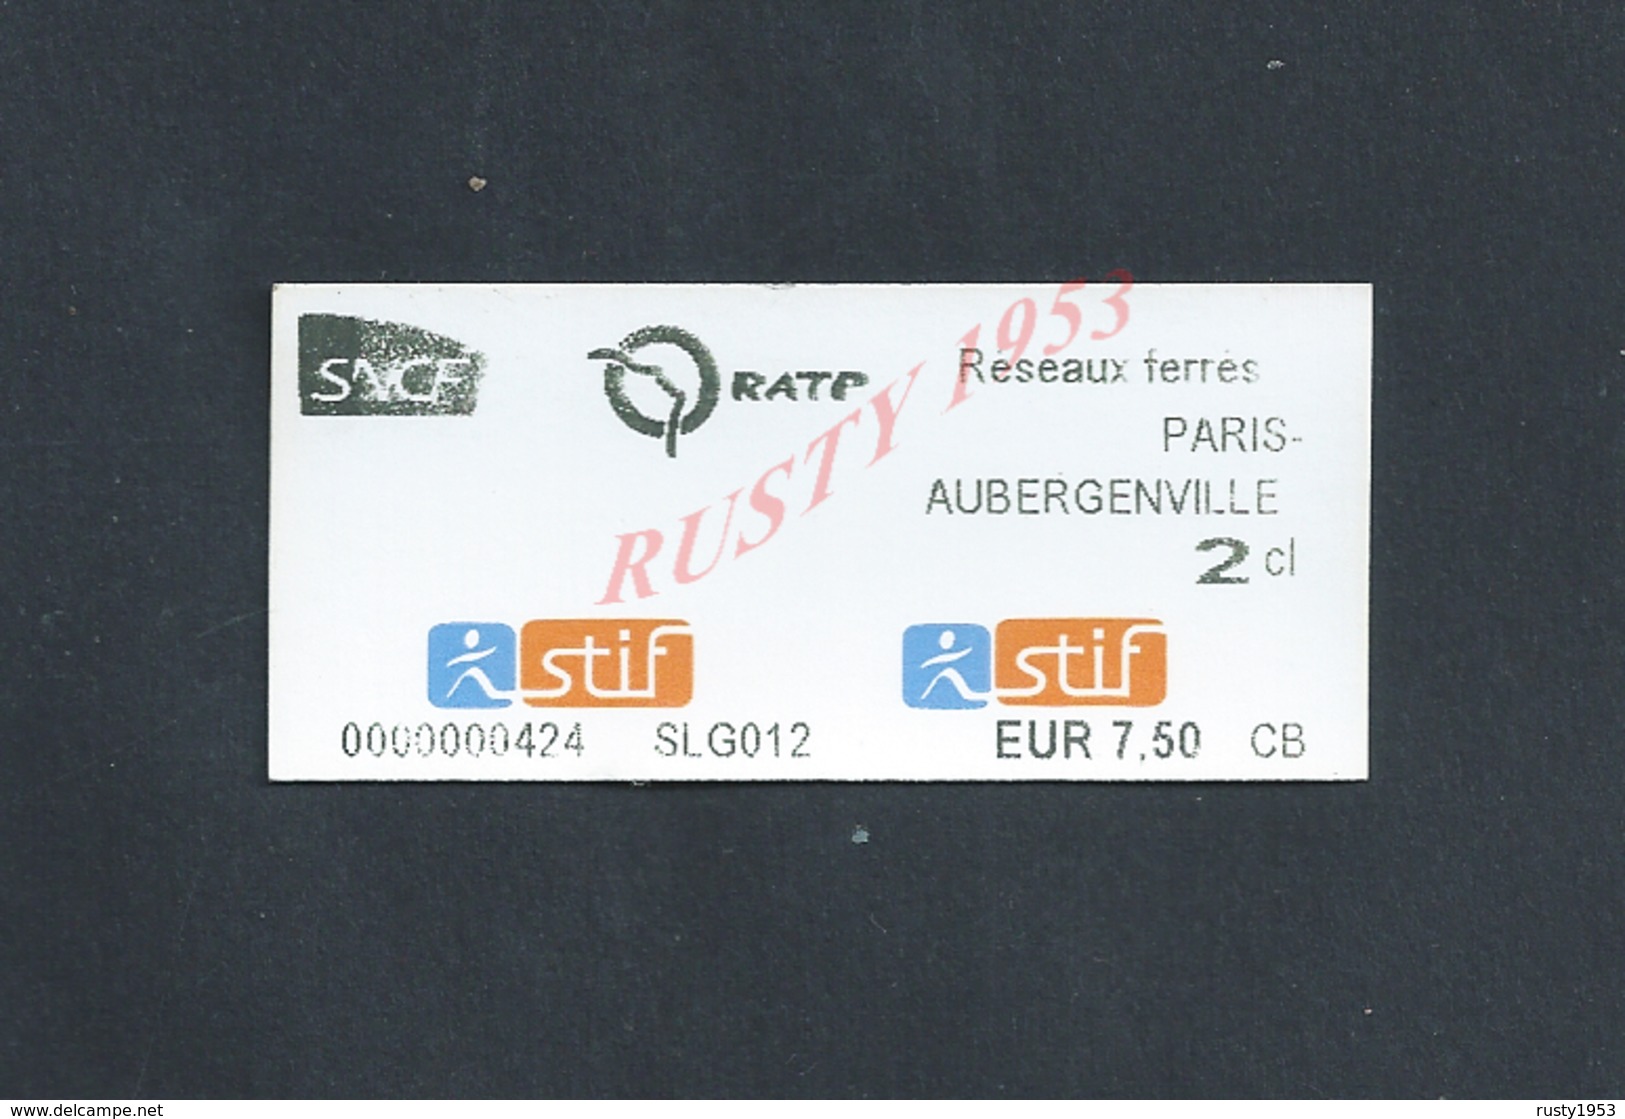 TICKET DE TRANSPORT SNCF R ATP BUS PARIS AUBERGENVILLE : - Europa